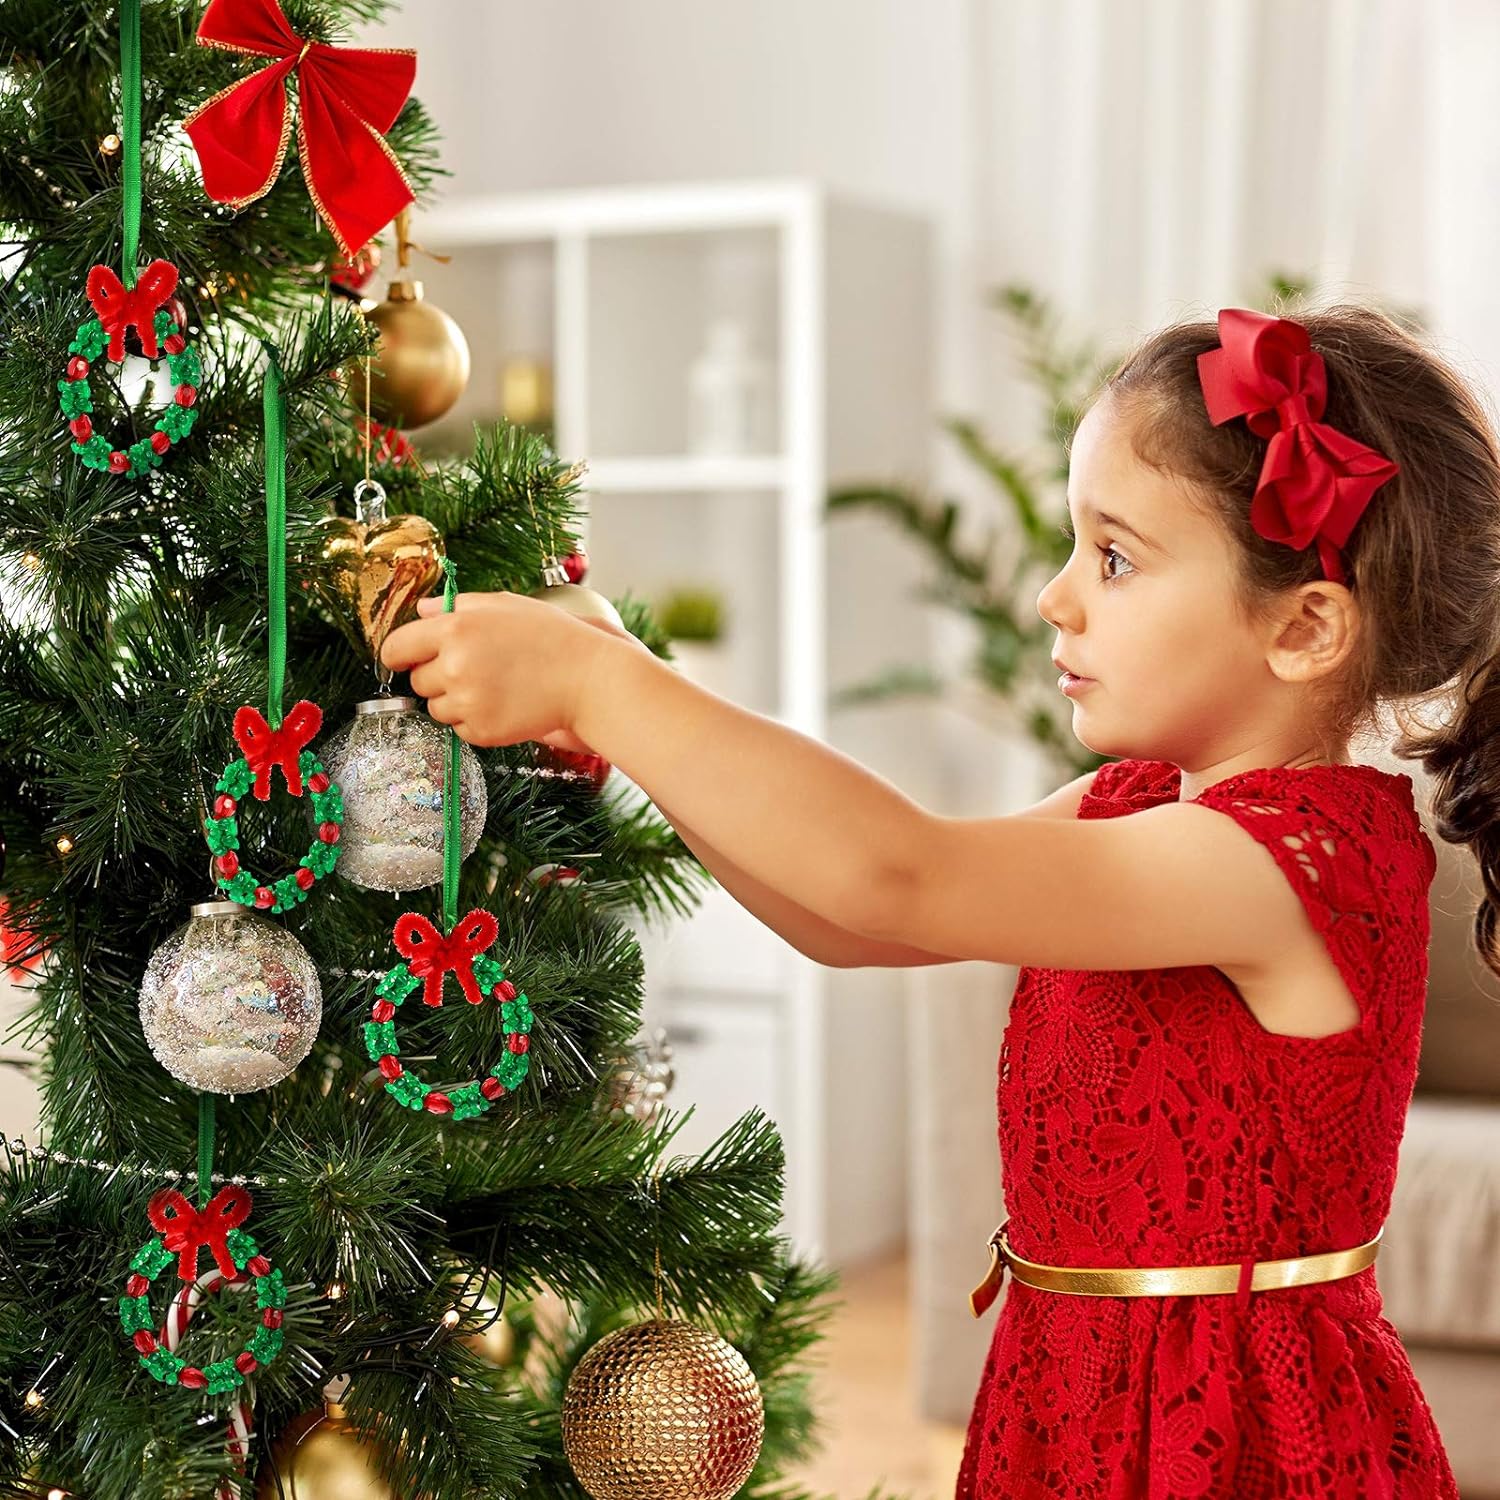 thinkstar 30 Sets Christmas Beaded Ornament Kit Xmas Craft Diy Wreath Holiday Christmas Tree Hanging Decorations With Christmas Ba…